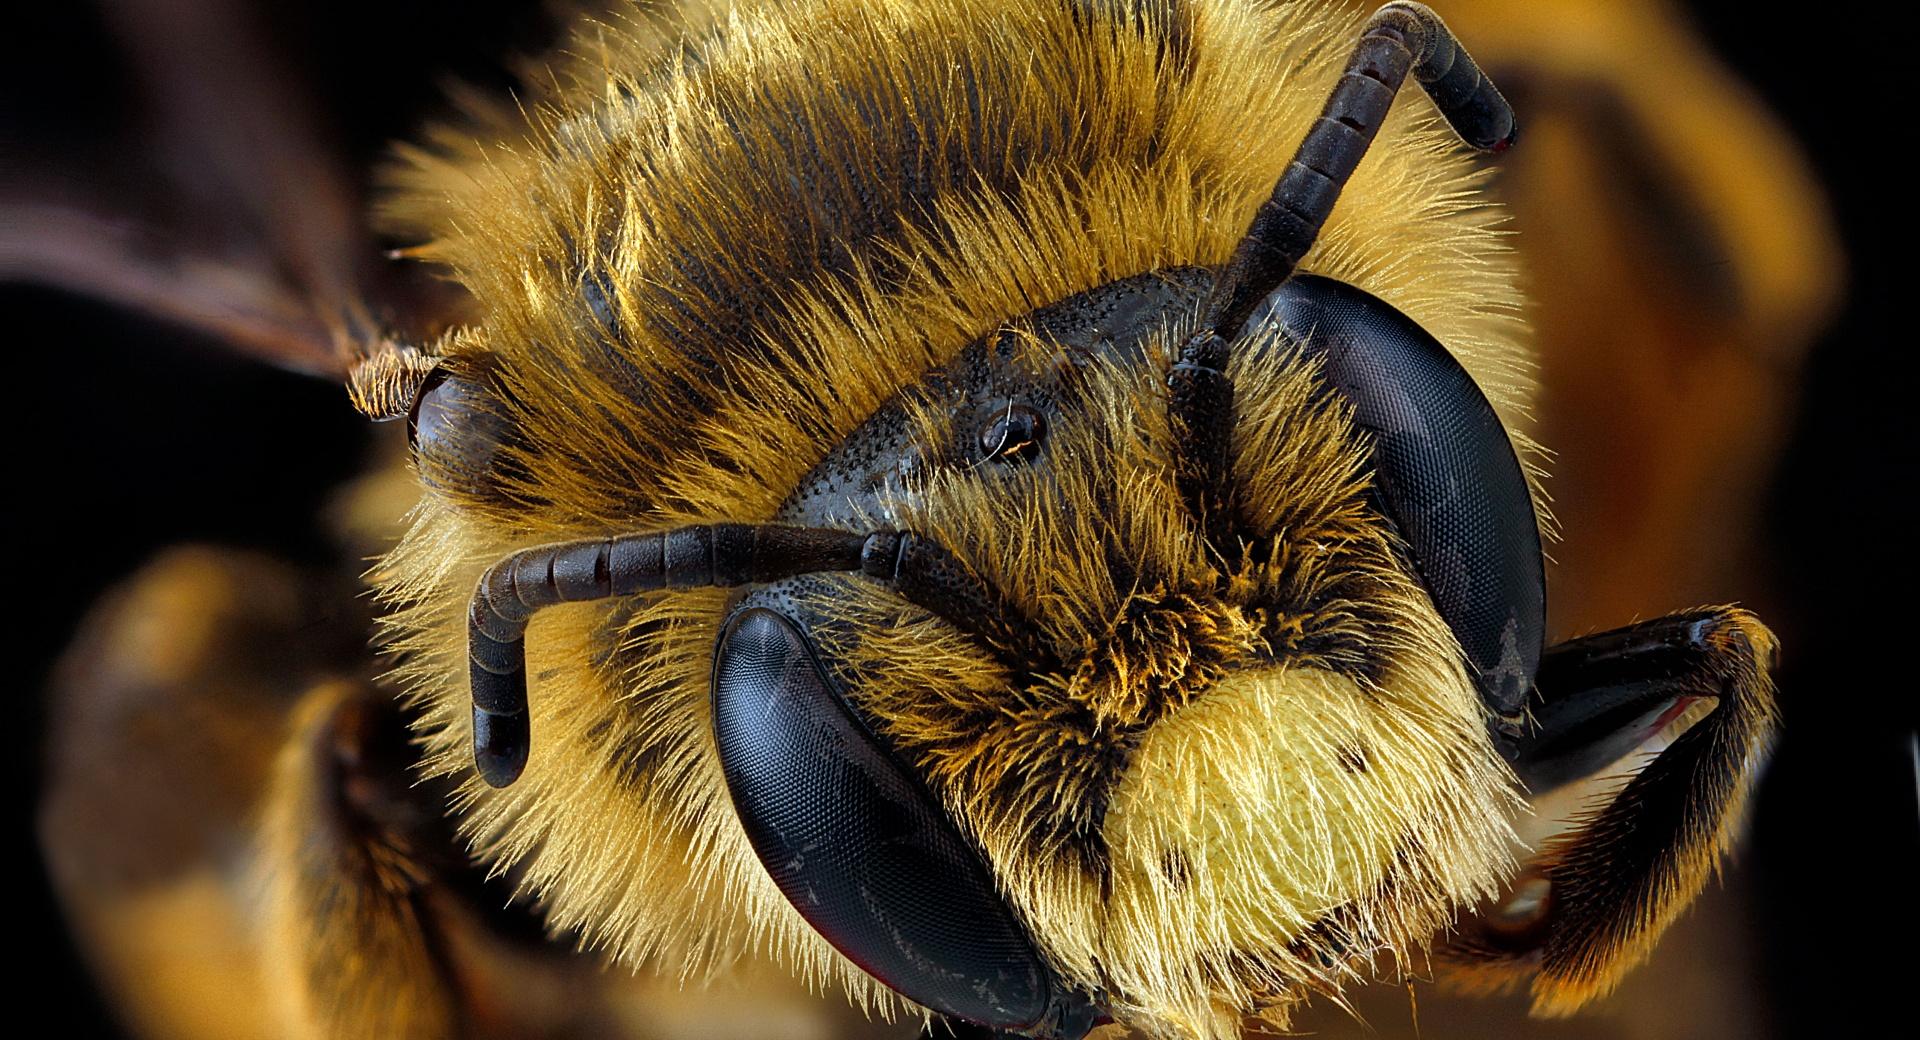 Andrena Rudbeckiae Mining Bee Head Macro at 1024 x 1024 iPad size wallpapers HD quality